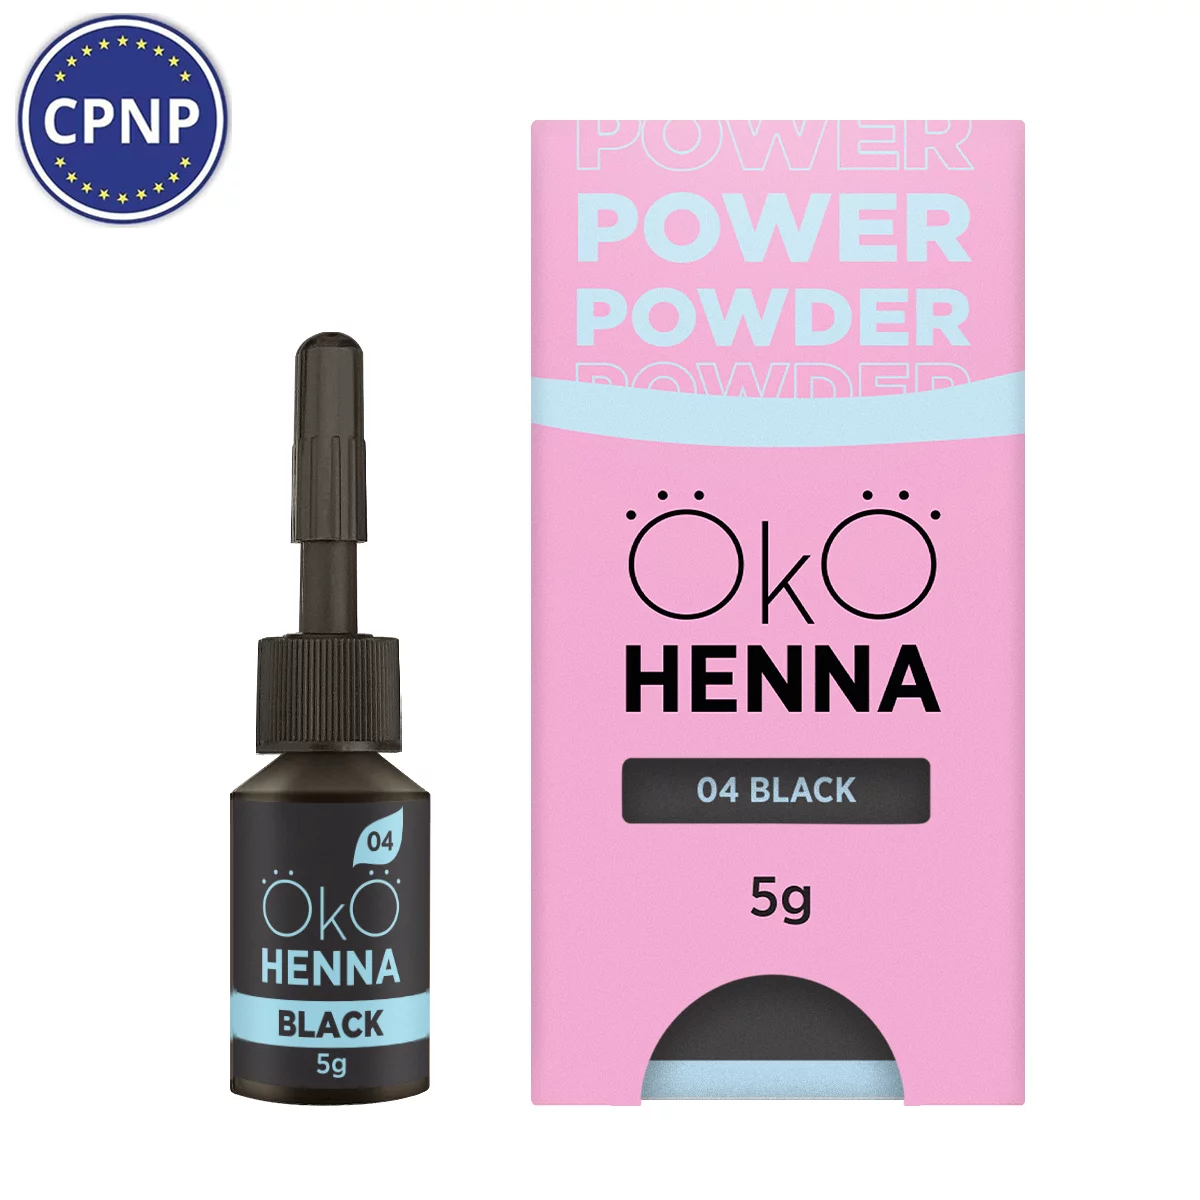 Къна за вежди OKO Power Powder, 04 Black, 5g